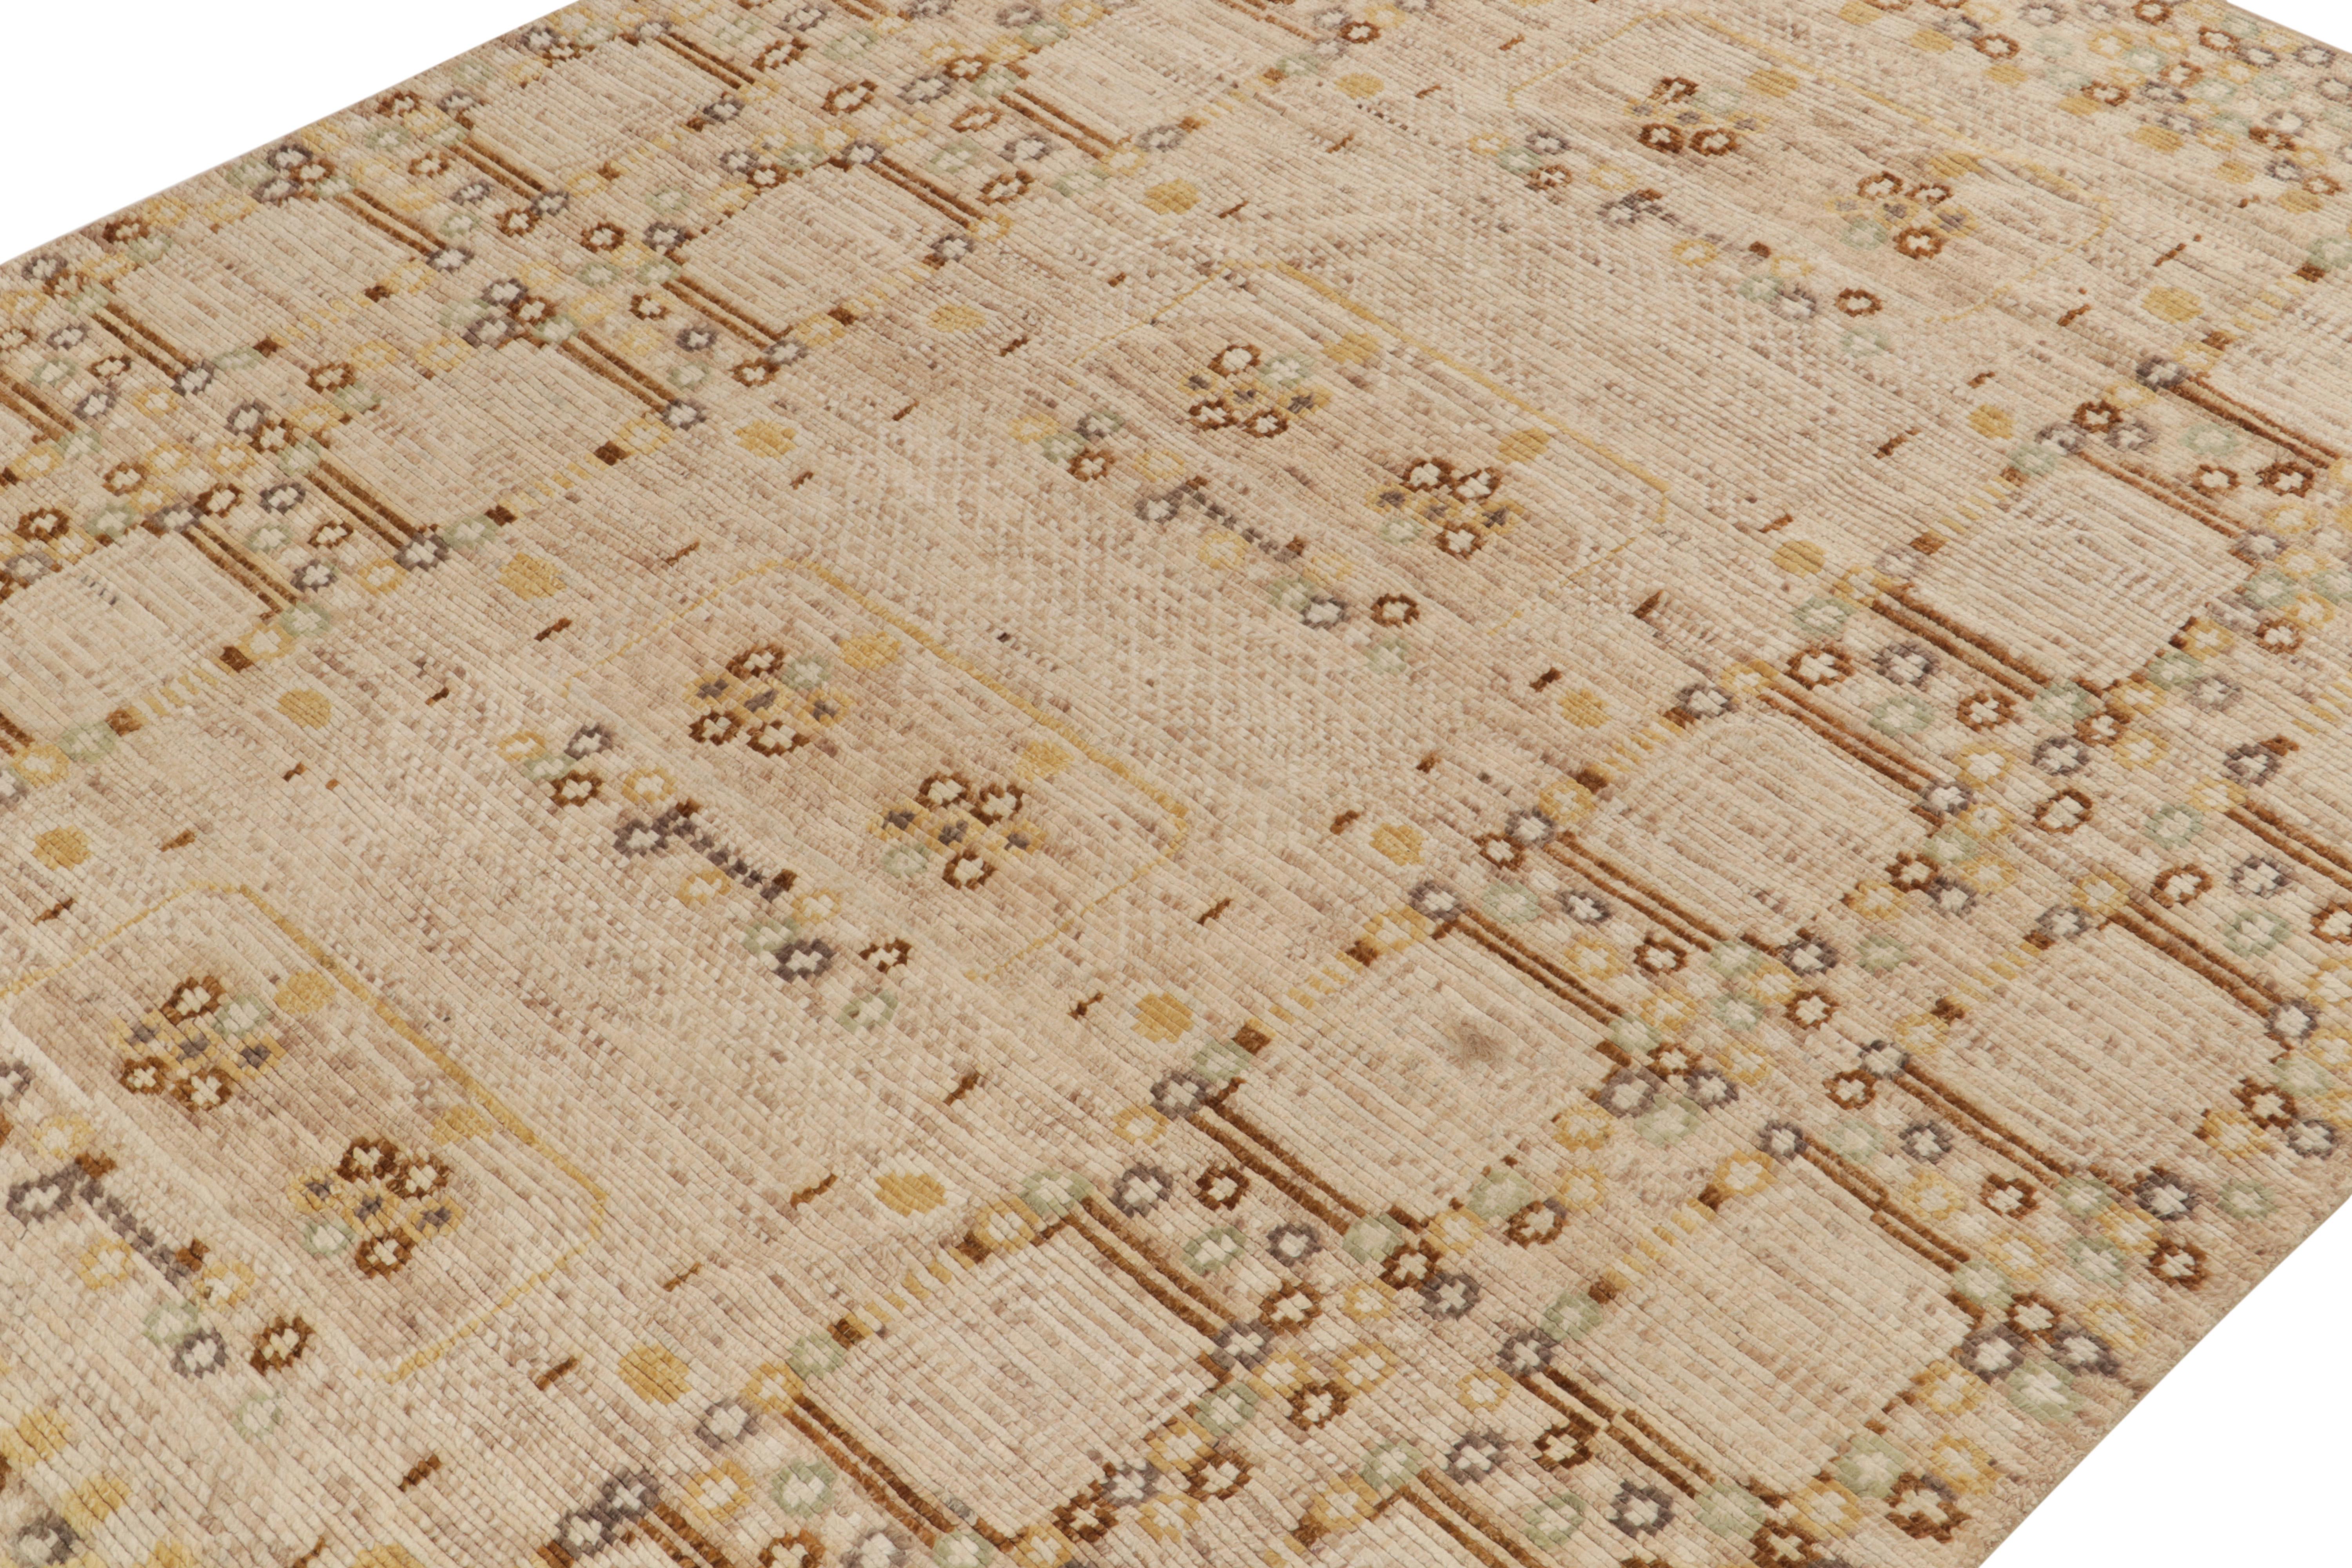 Indian Rug & Kilim's Scandinavian Style Rug in Beige-Brown, Gold Geometric Pattern For Sale